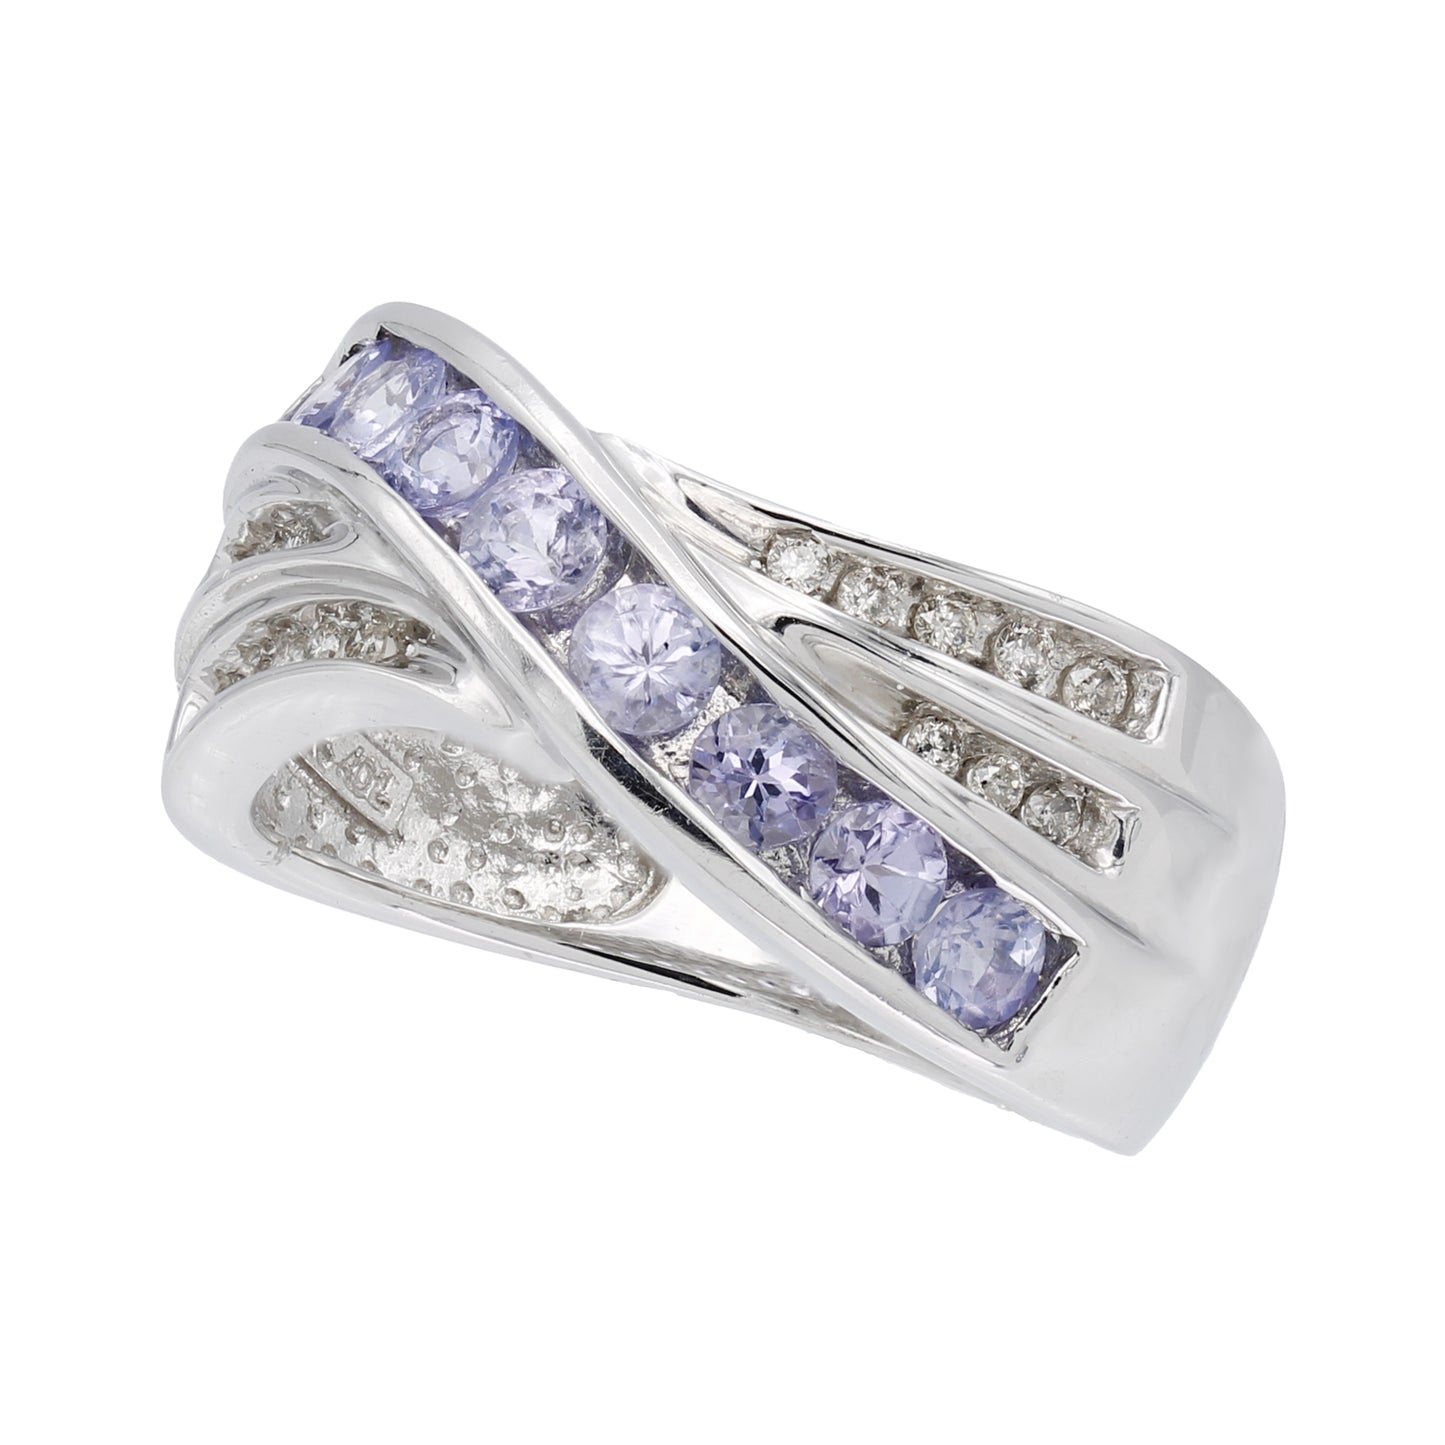 14k White Gold Diamond & Lavender Quartz Fancy Style Ring - 0.32ct TDW